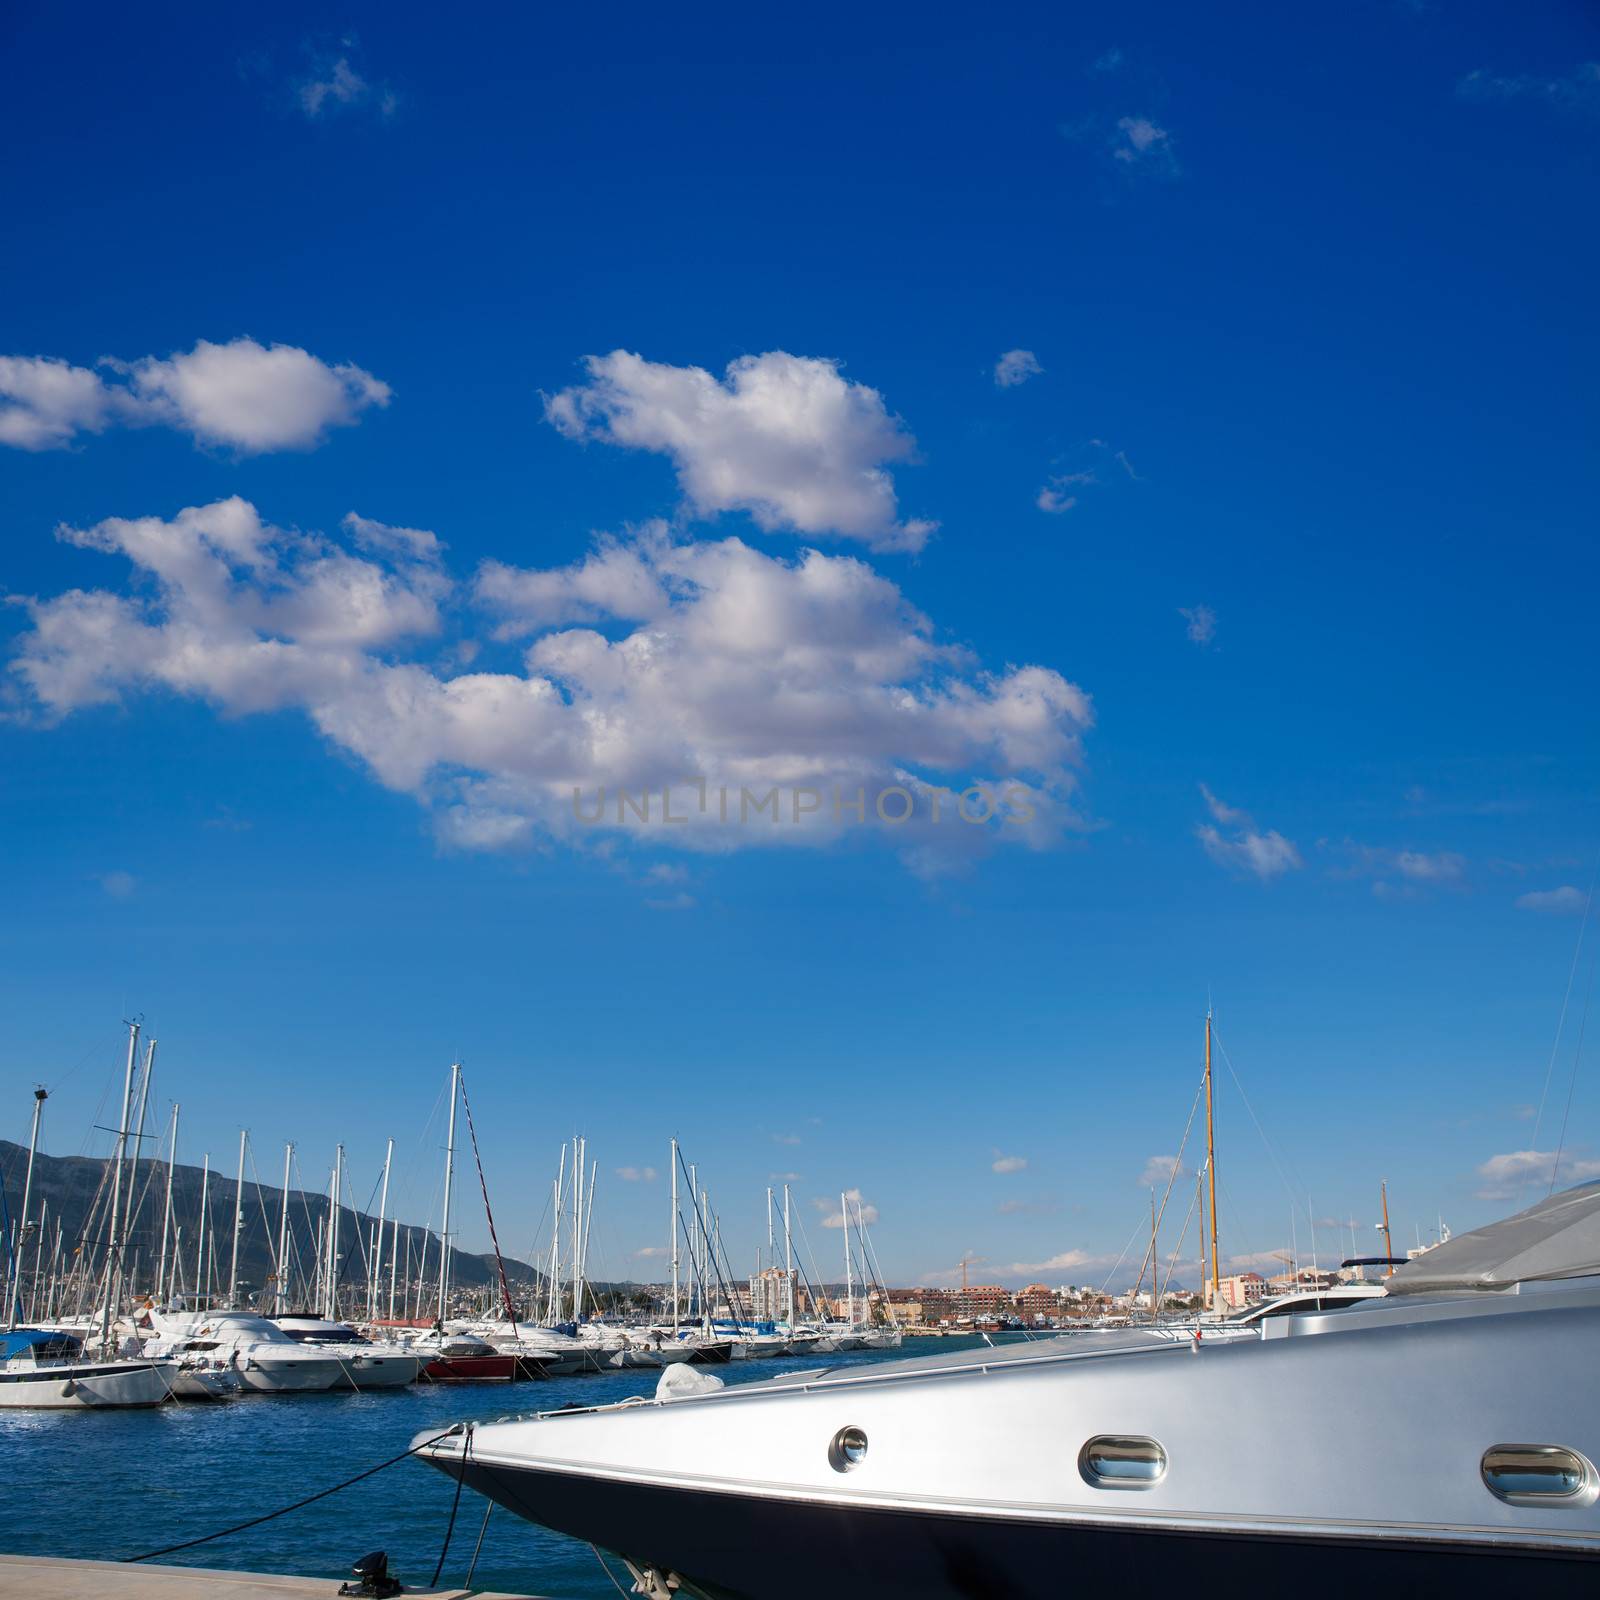 Denia Alicante marina boats in blue Mediterranean Spain